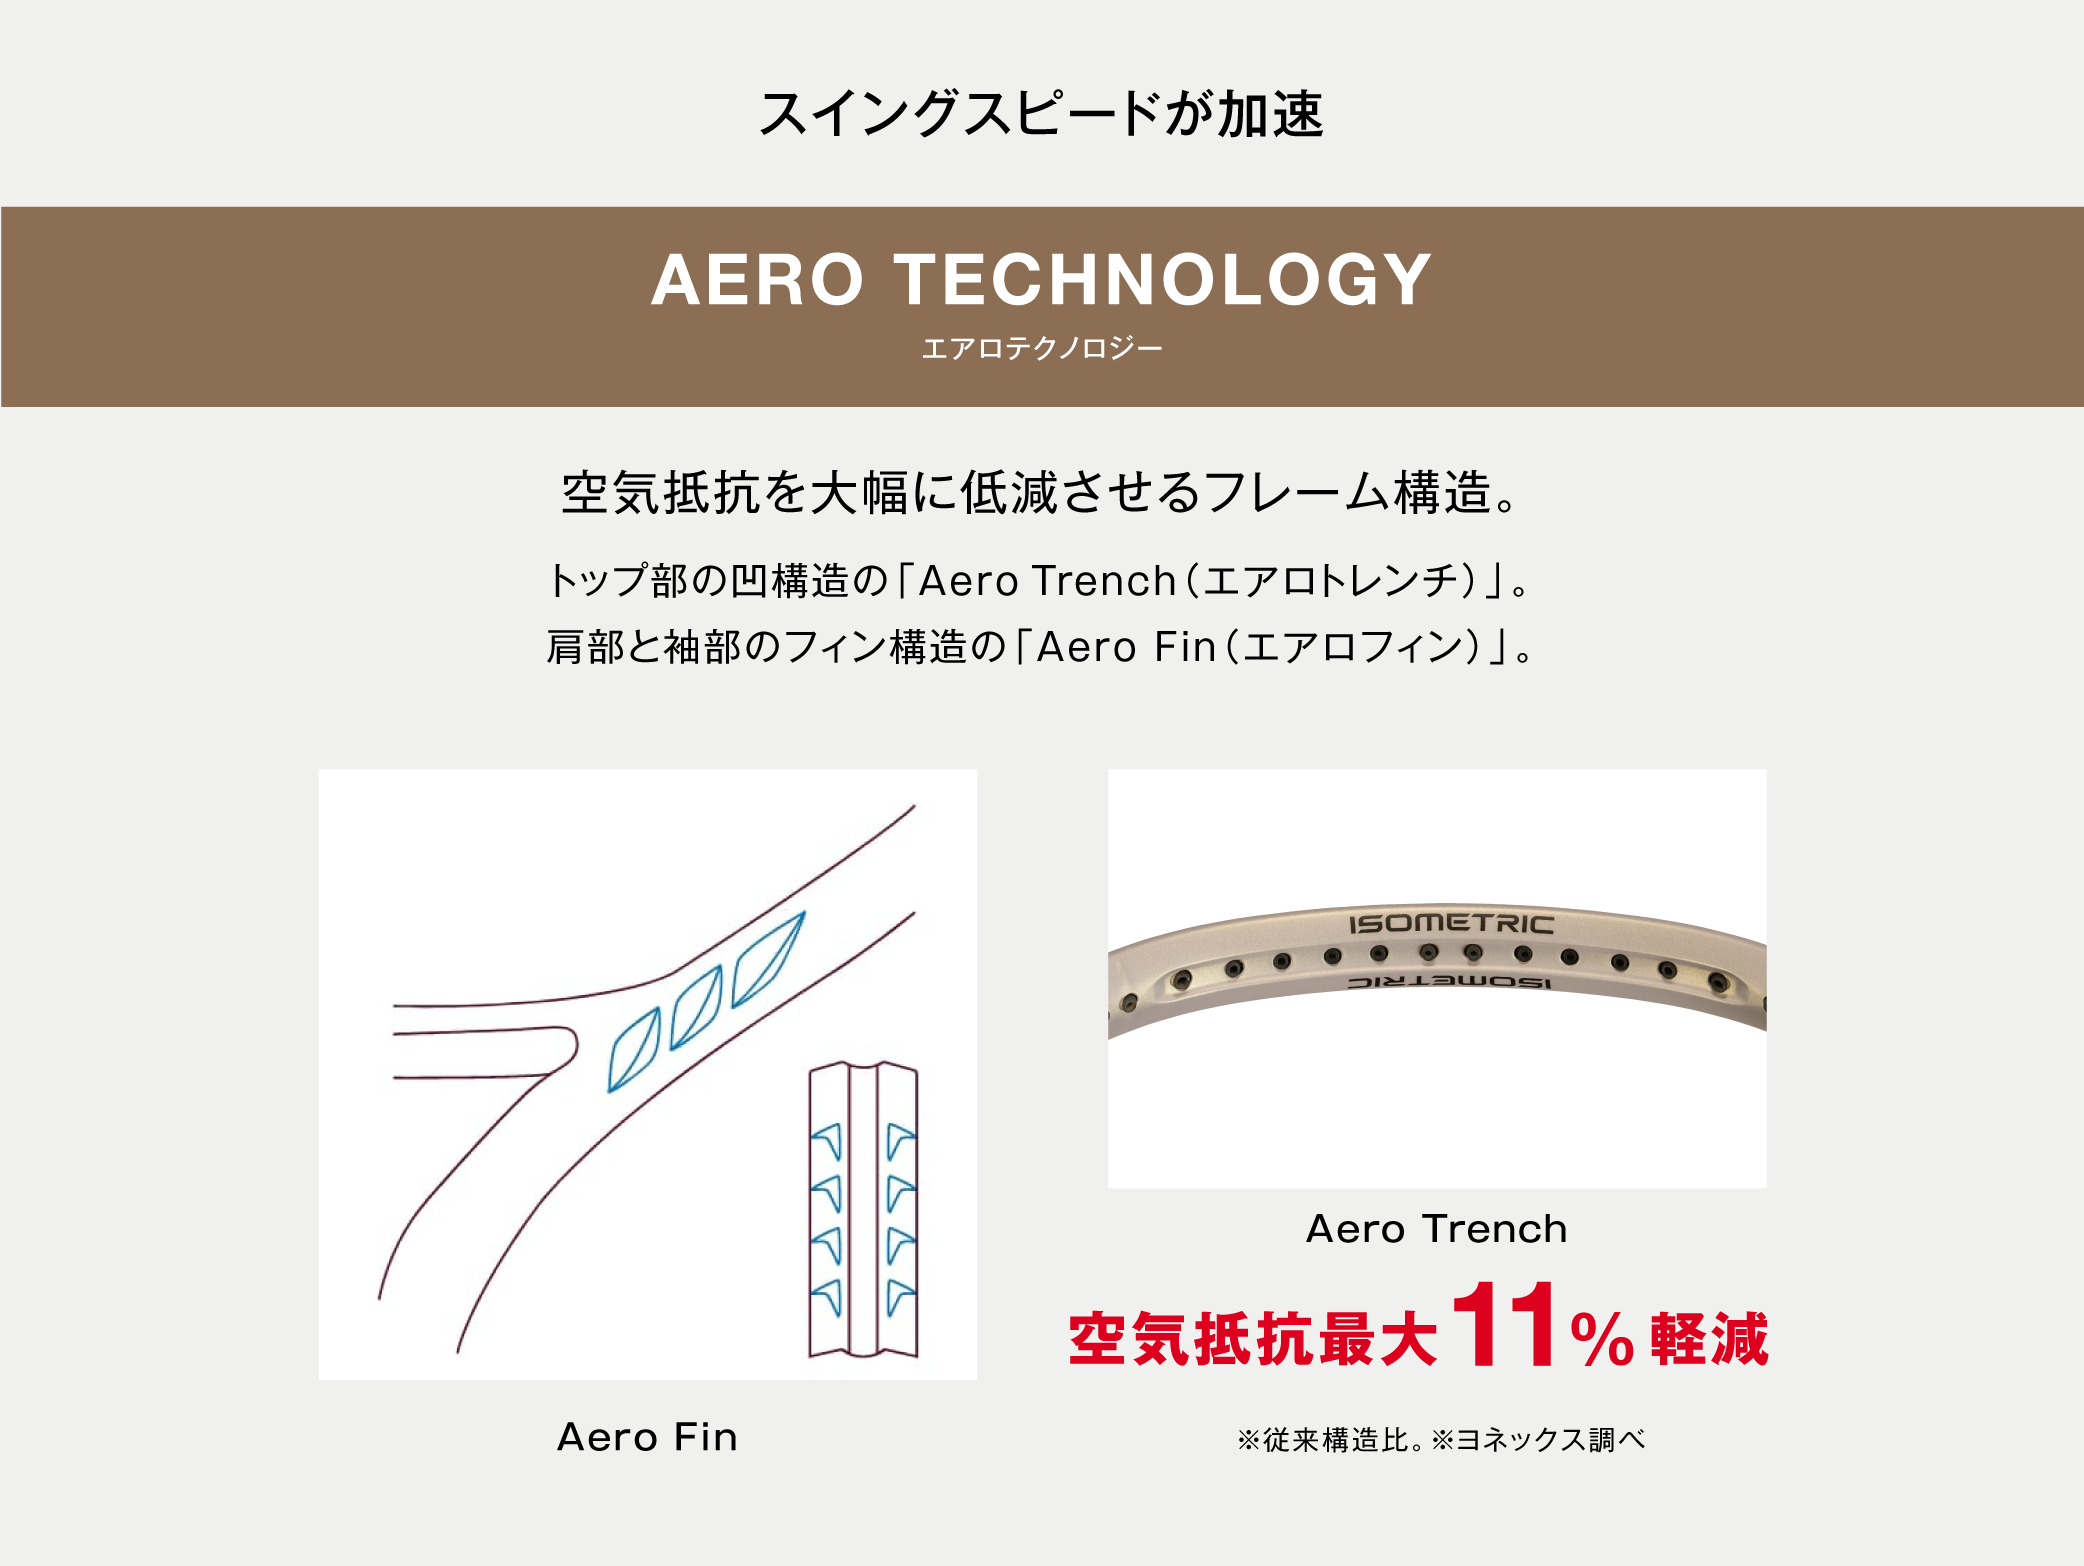 AERO TECHNOLOGY